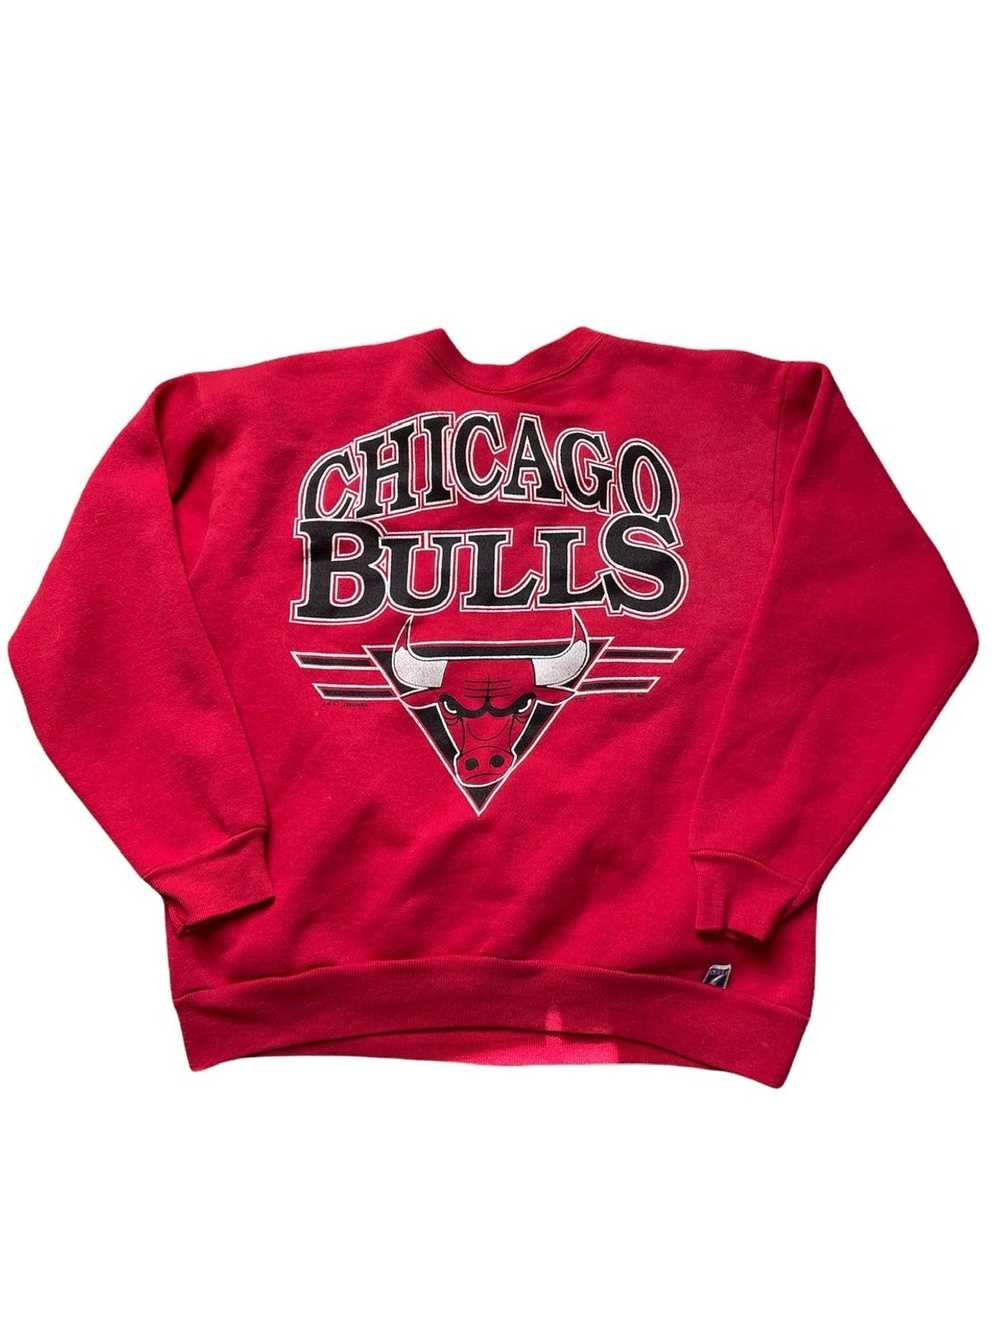 Vintage 90s Nike Team Chicago Bulls Big Logo Very Rare Sweatshirt Crewneck